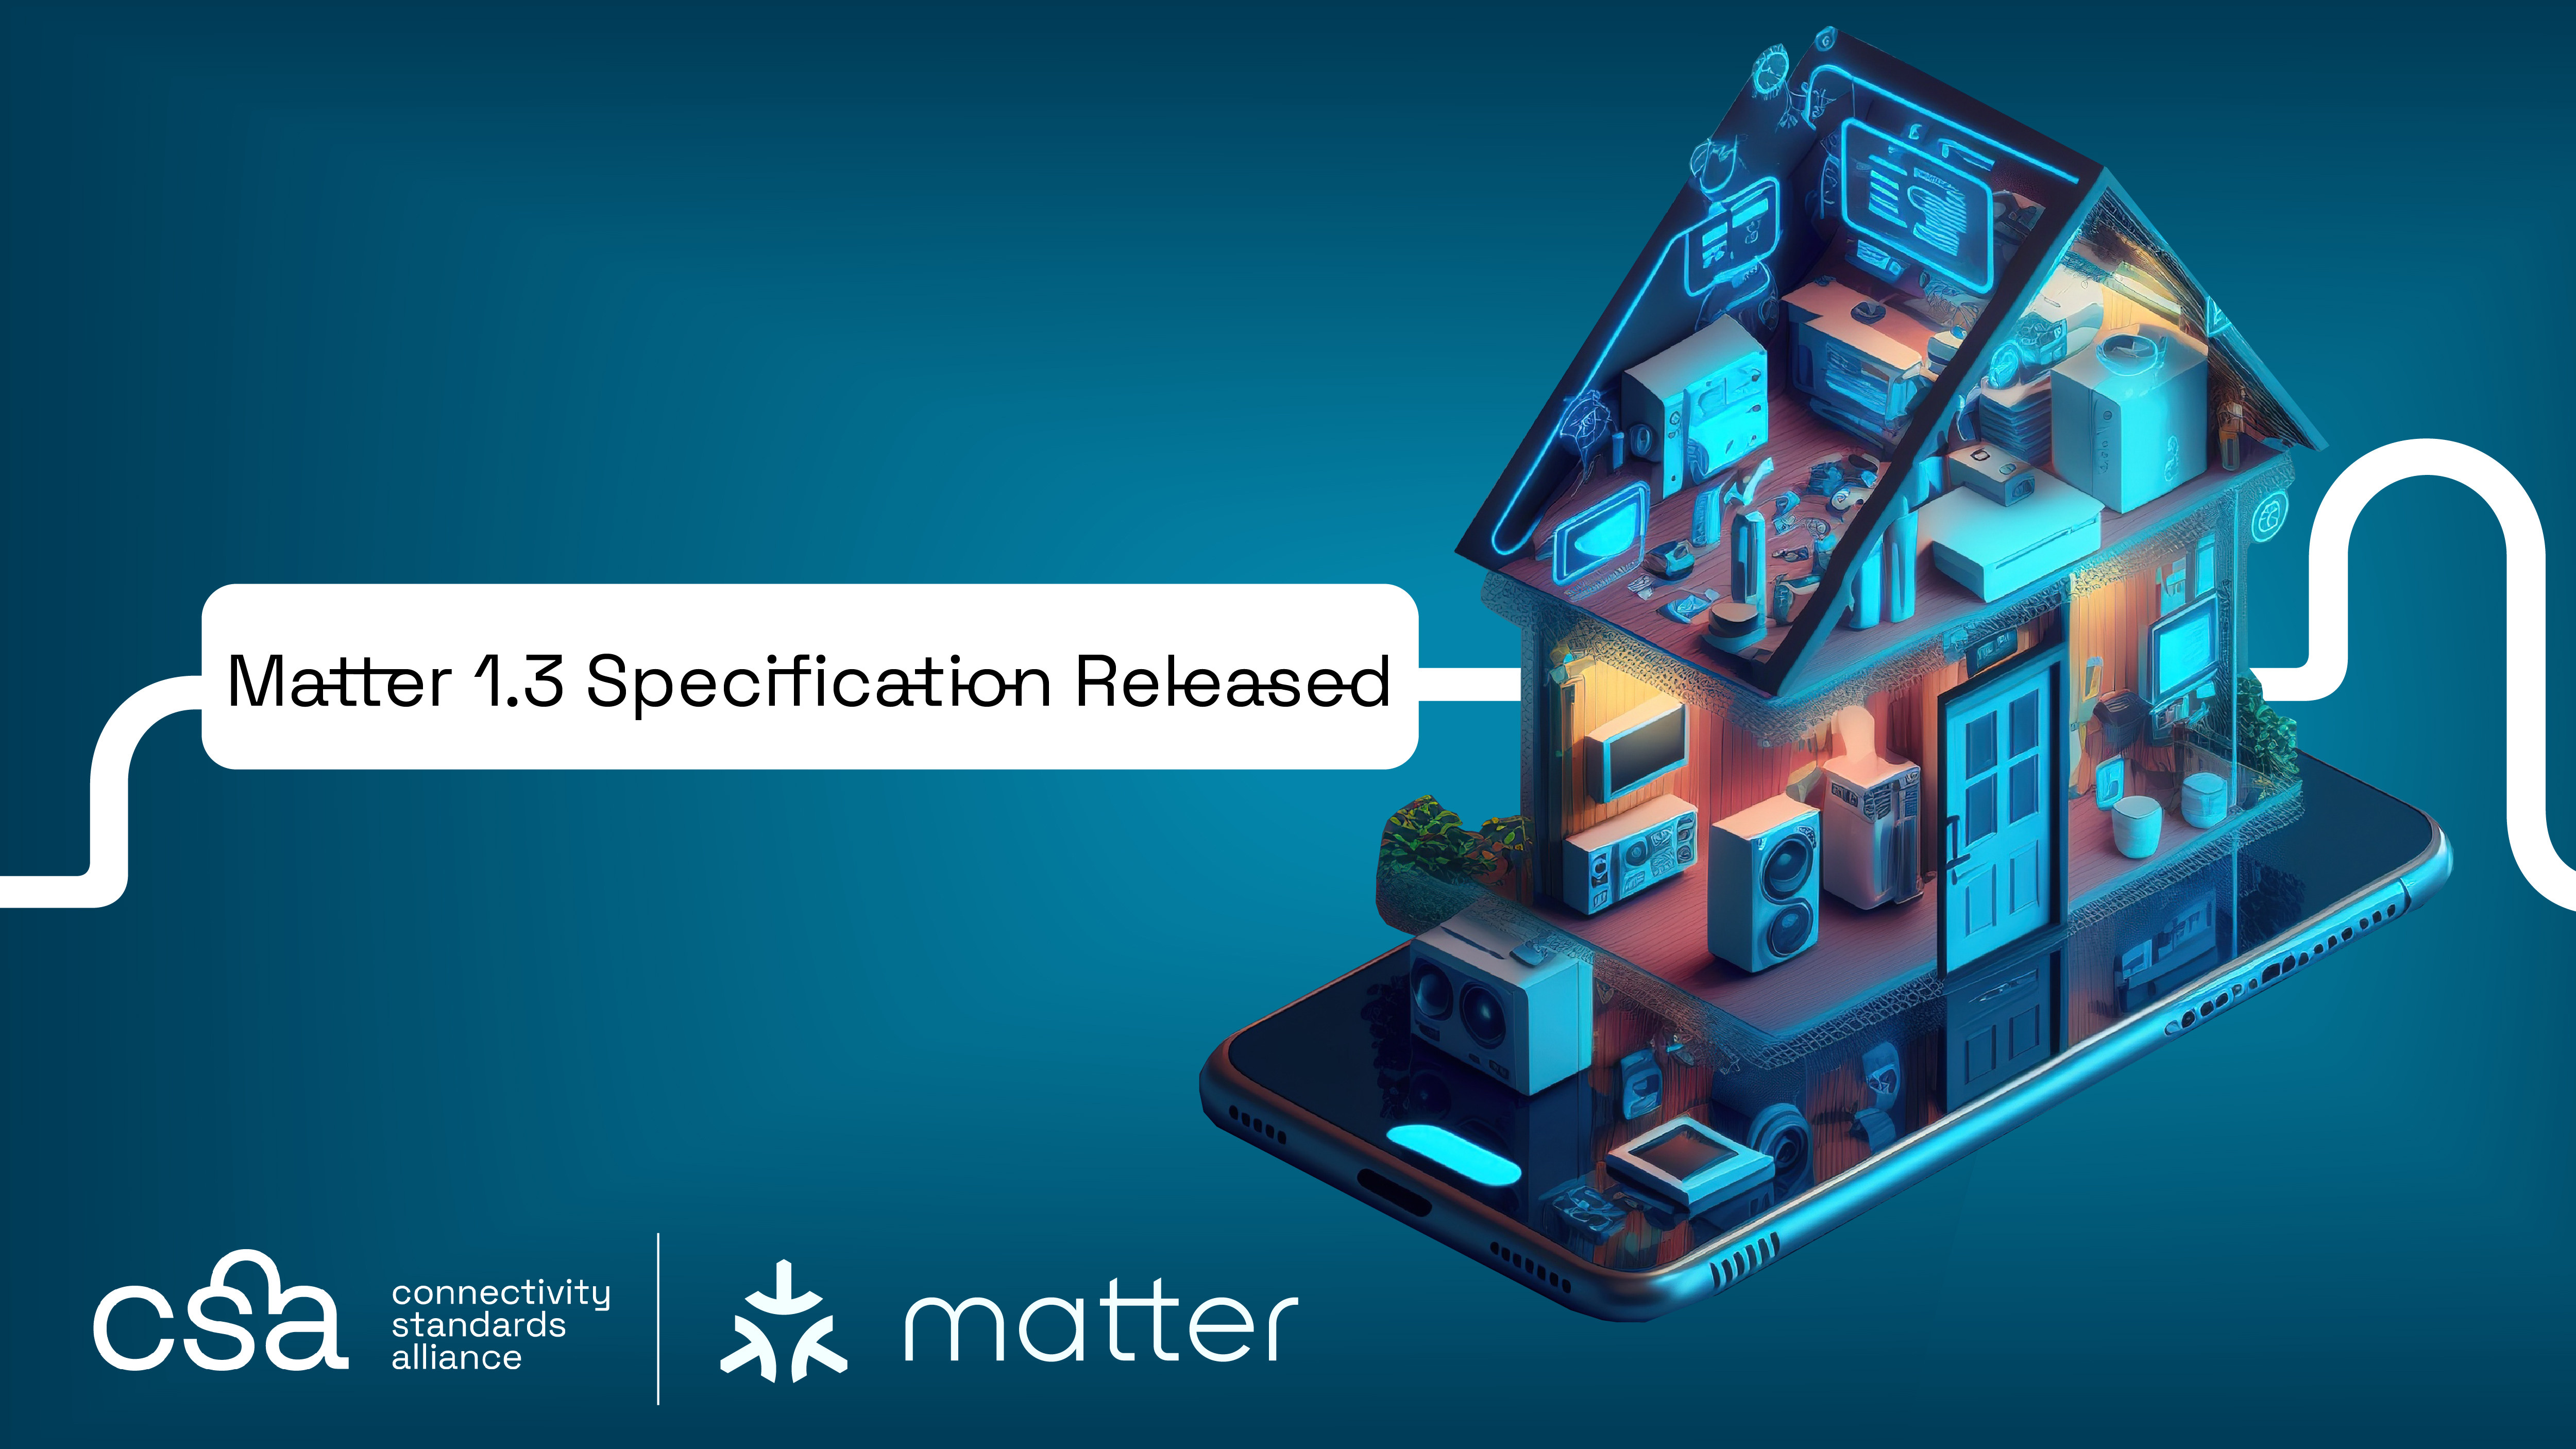 Matter 1.3 Specification